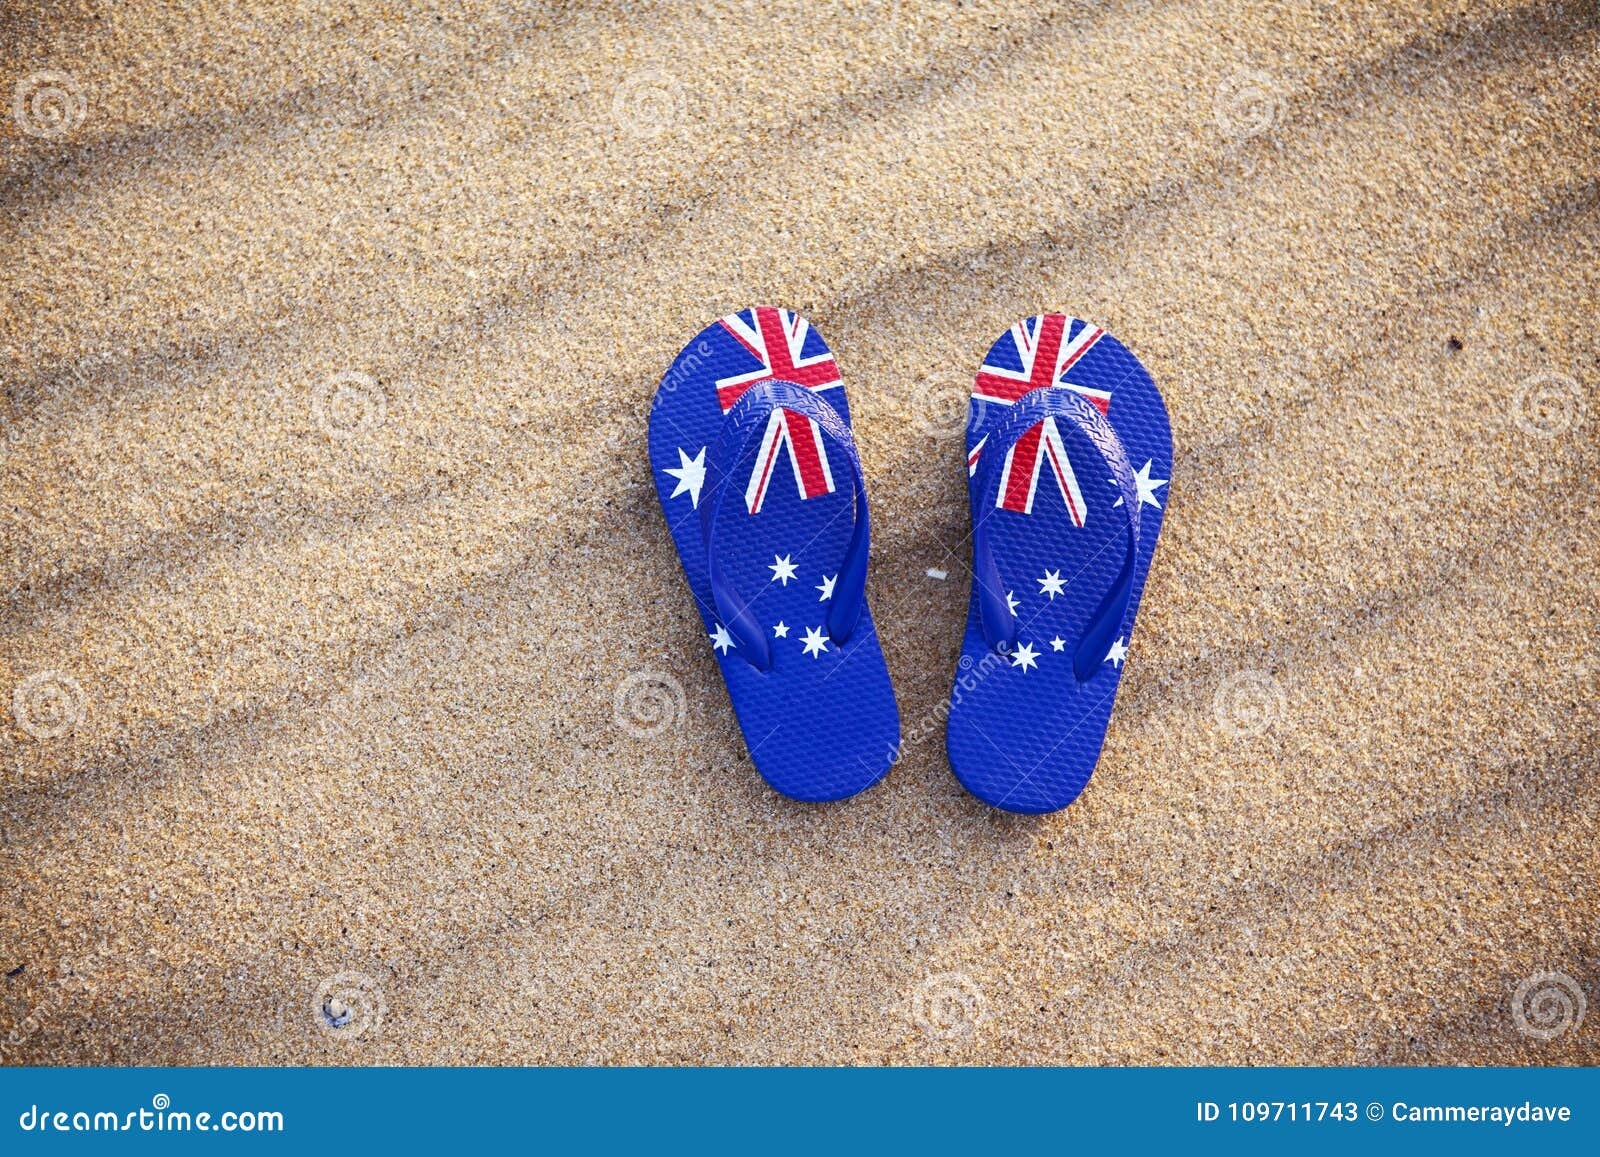 https://thumbs.dreamstime.com/z/flag-thongs-beach-australia-pair-australian-sandals-sandy-109711743.jpg